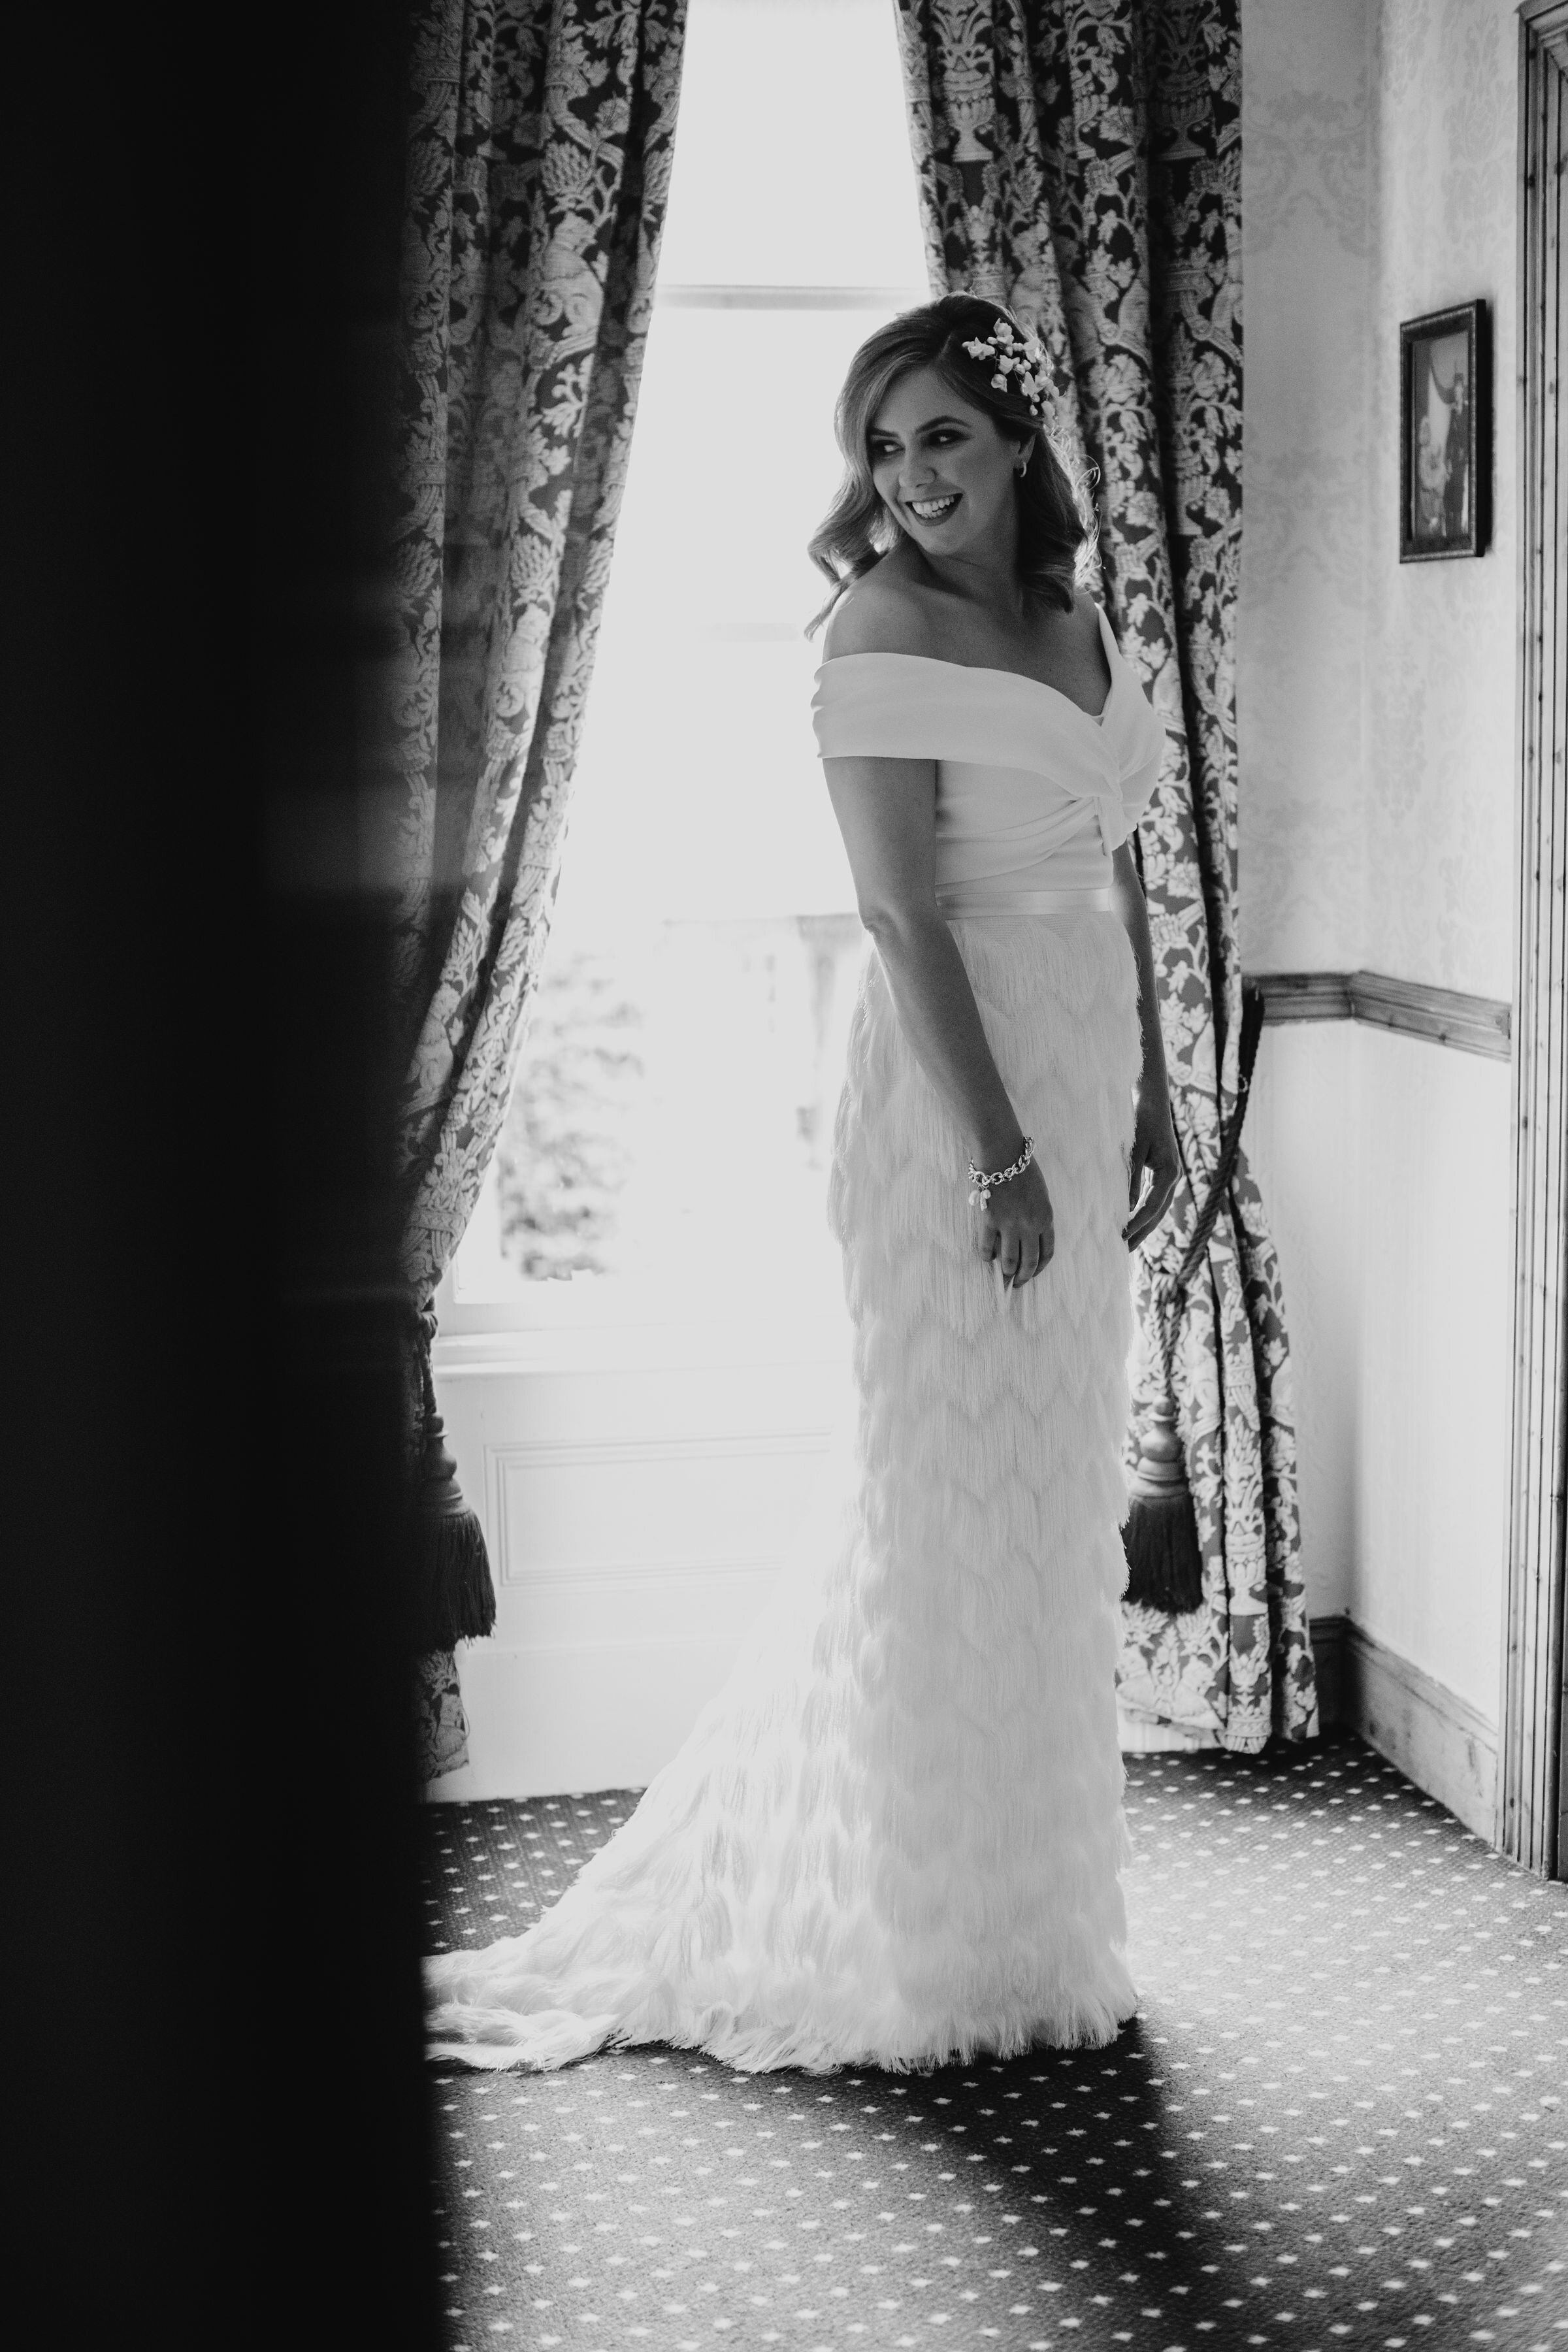 Beautiful bride Emma wore a wedding dress by Halfpenny London